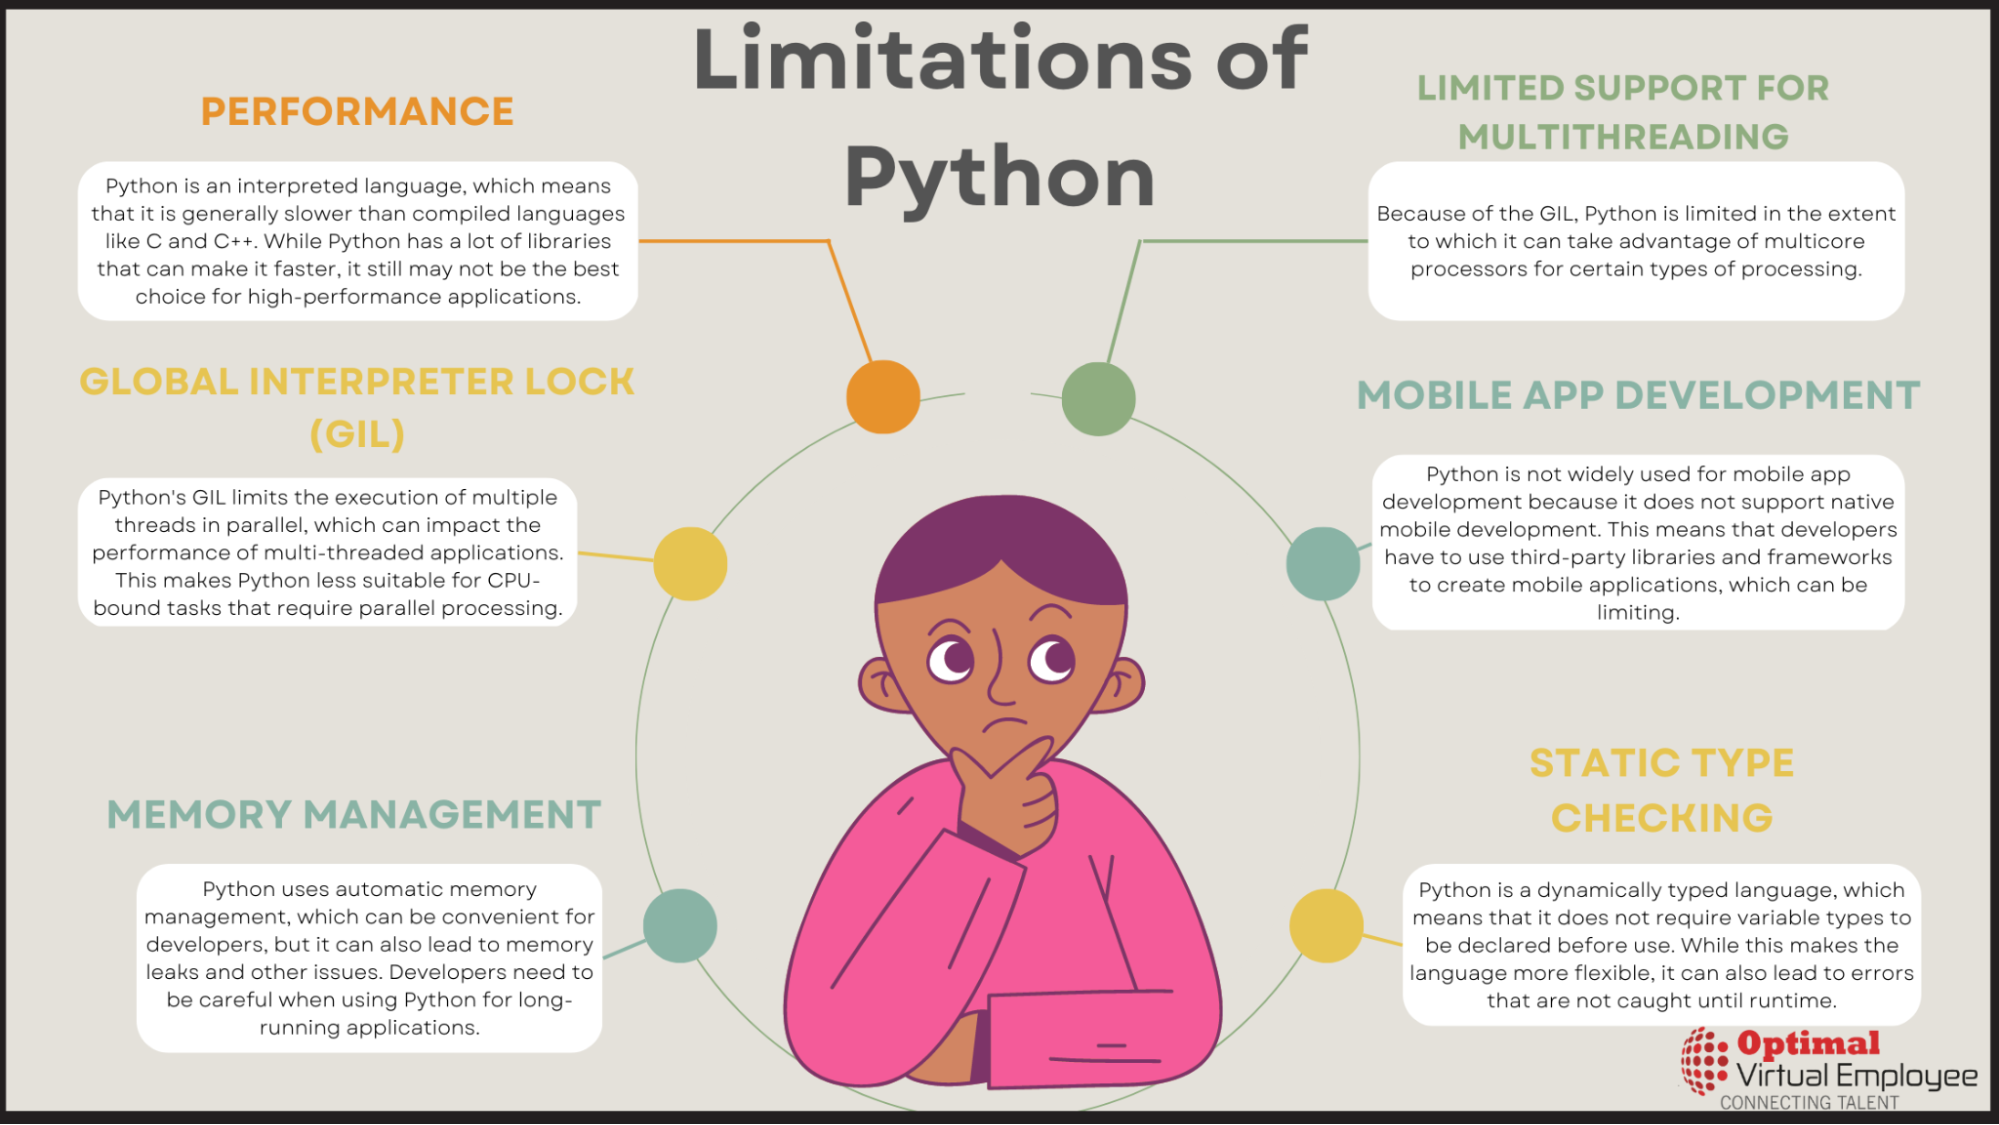 Limitations of Python